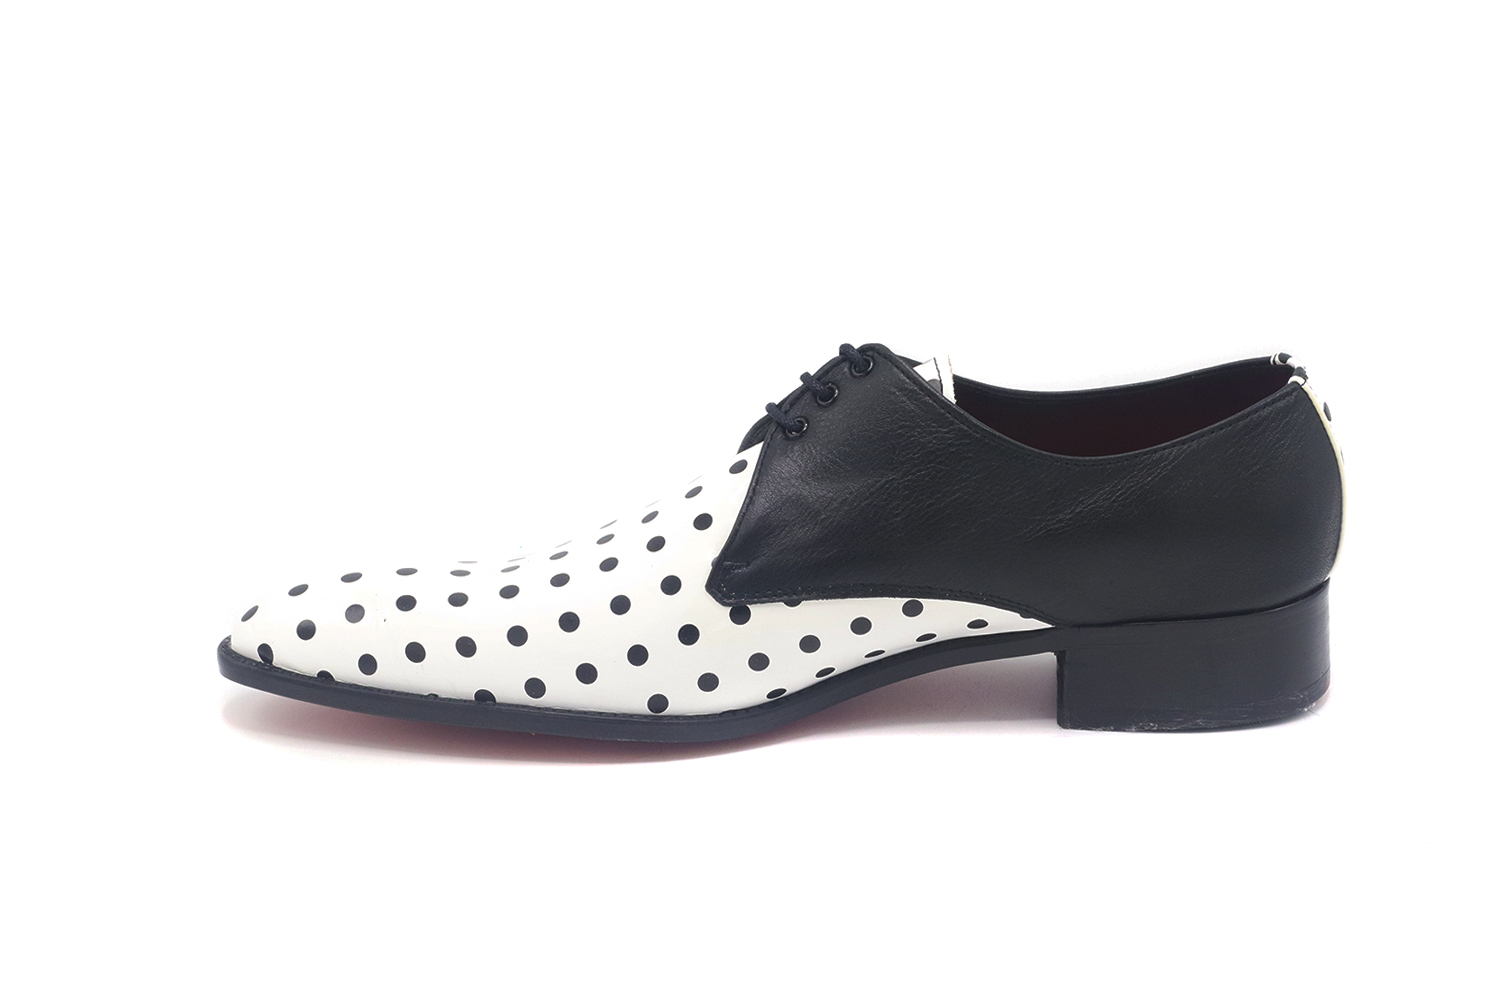 Sevilla model shoe, made of black Napa and black polka dot nappa